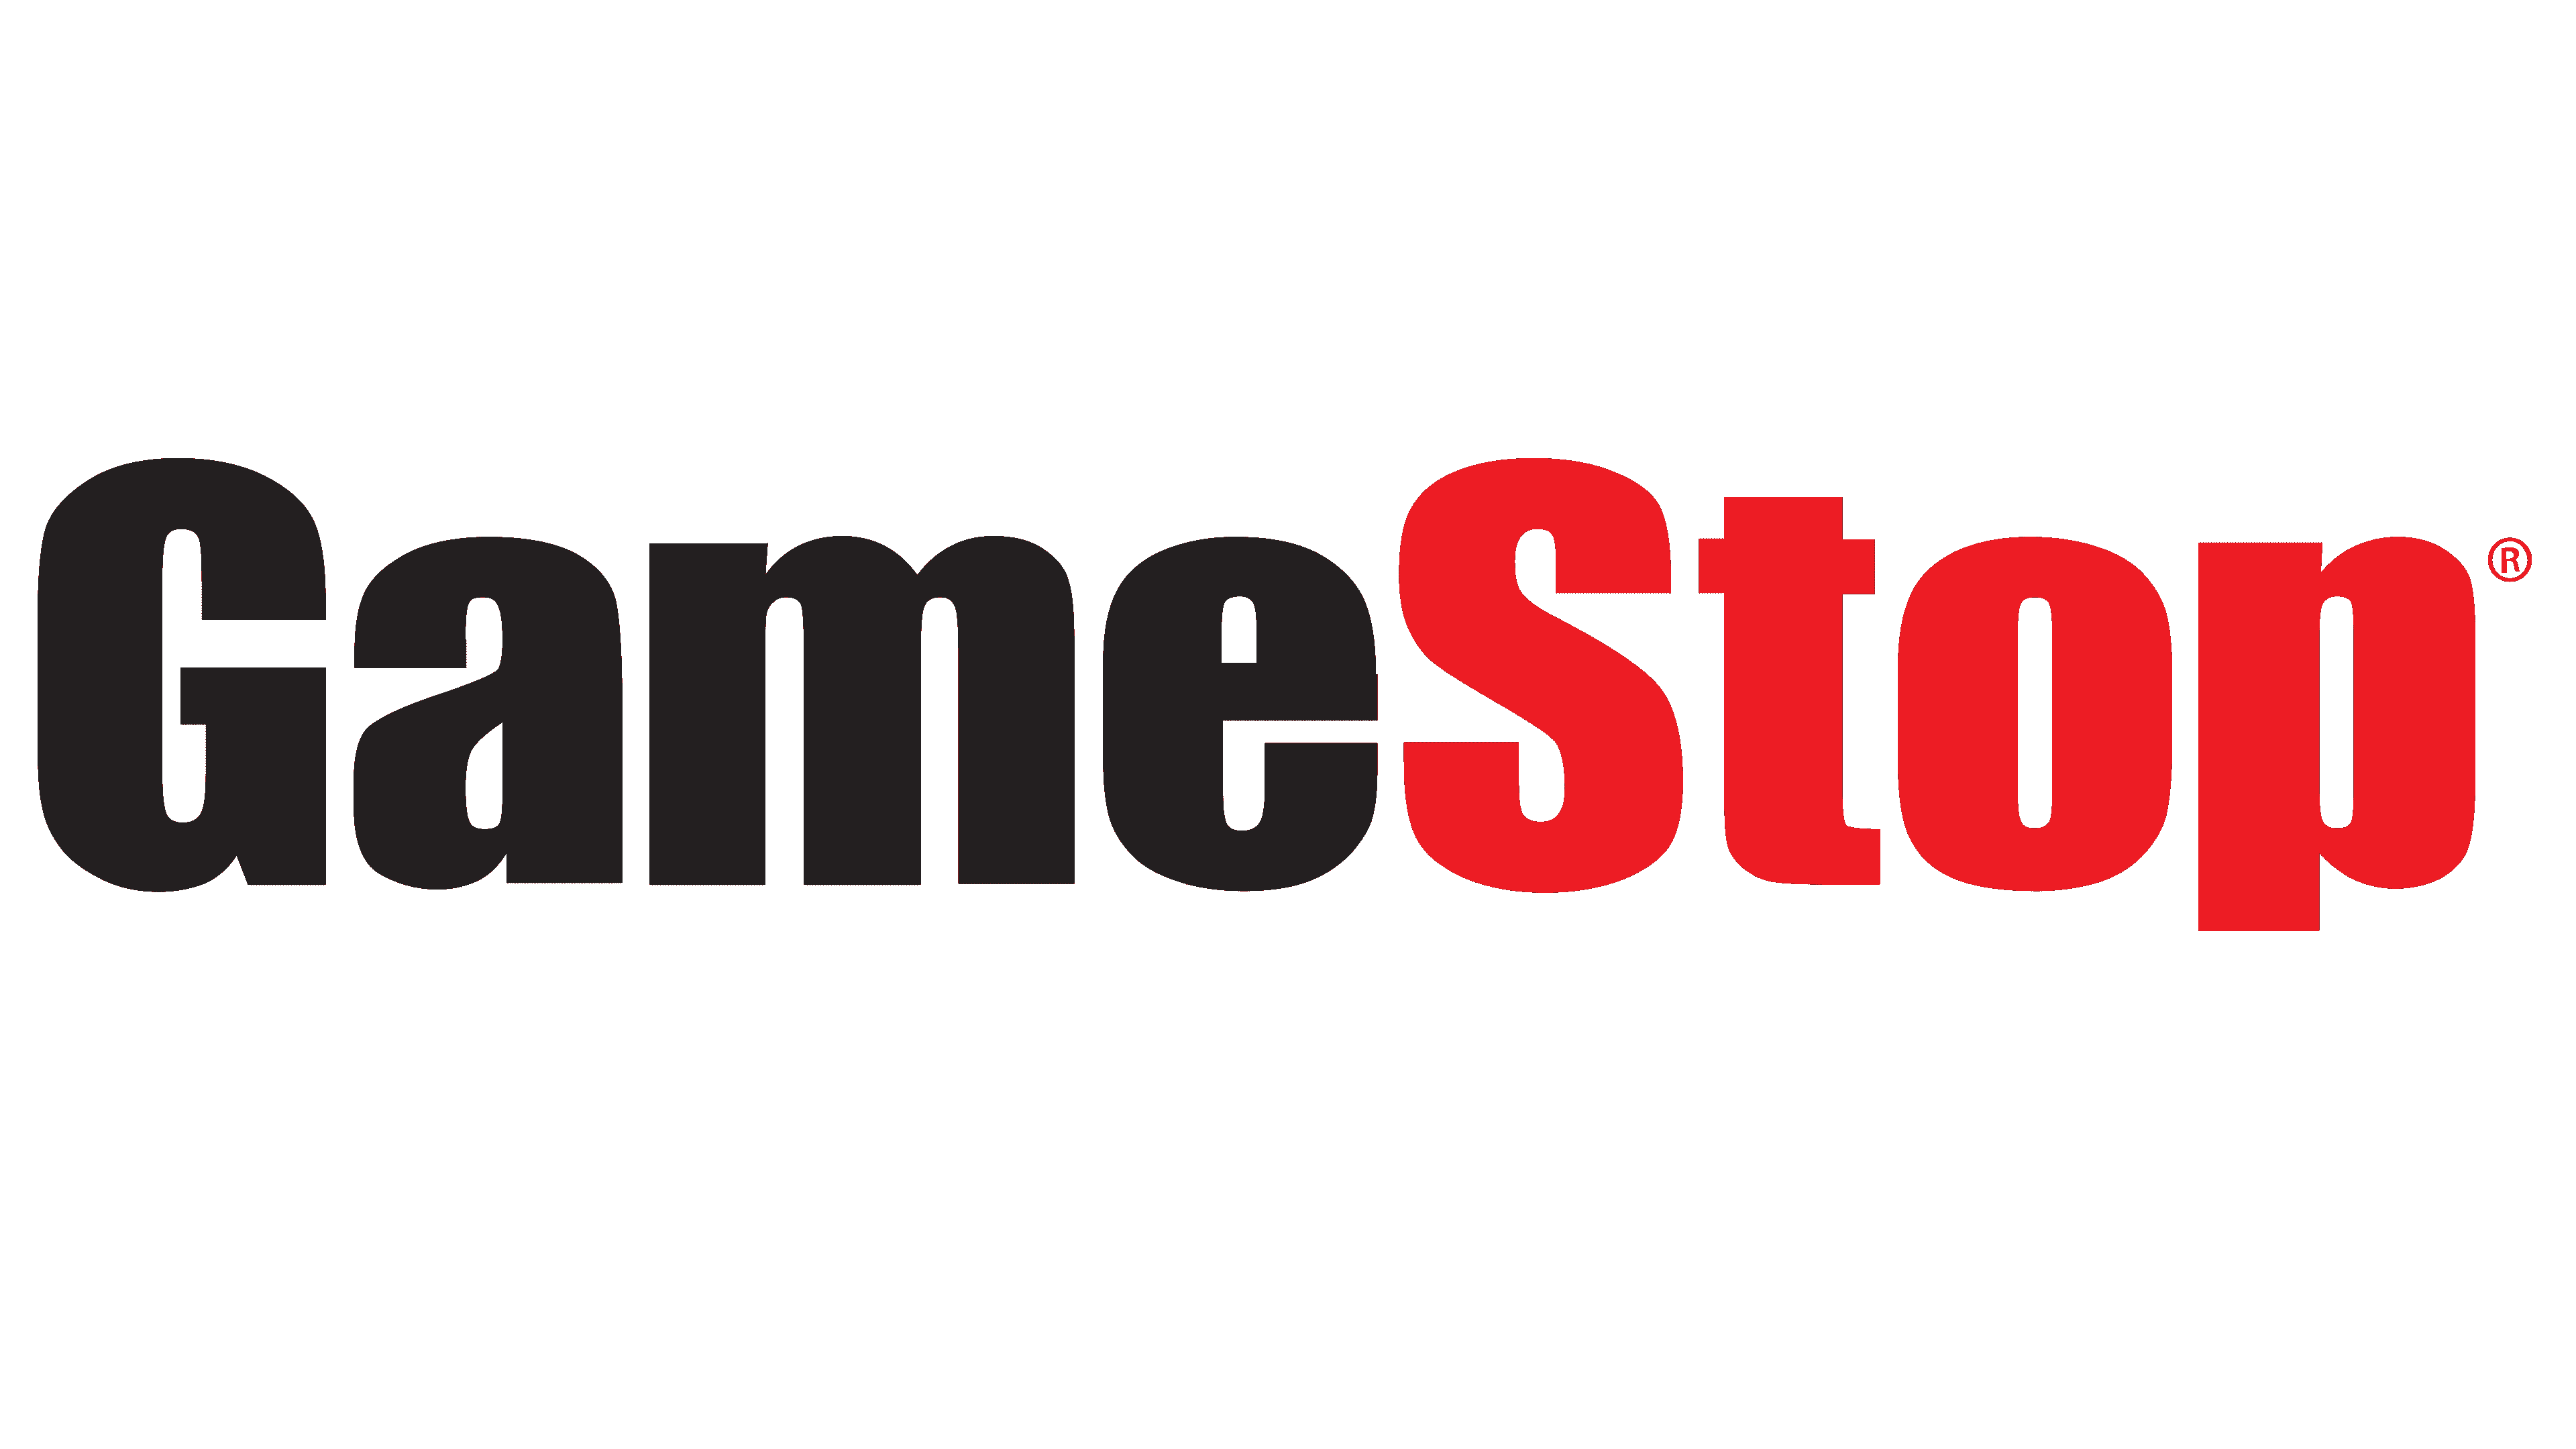 GameStop-logo